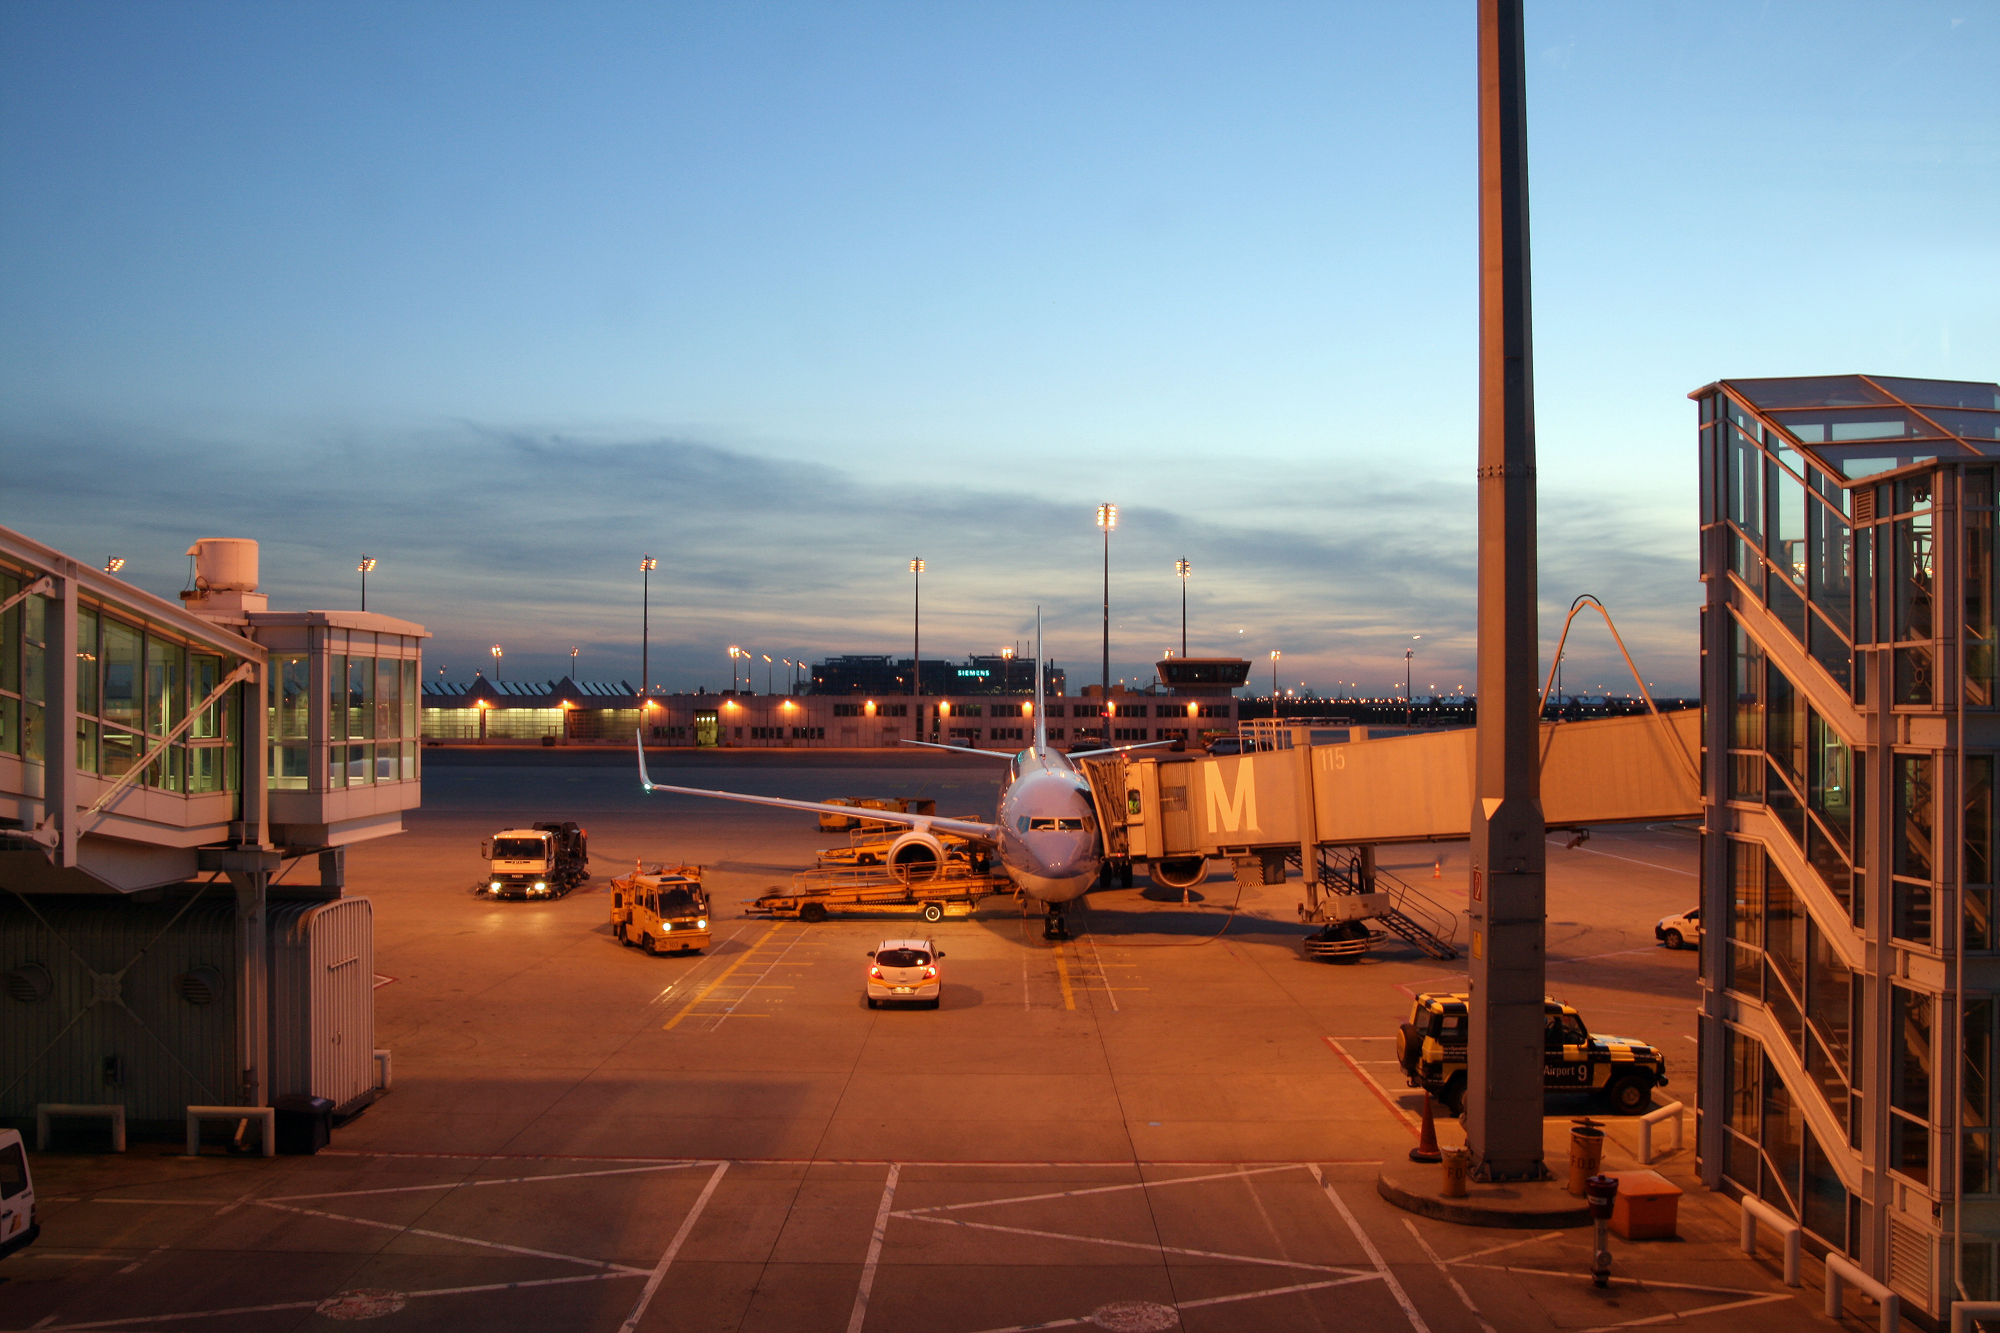 Munich Airport plane handling at sunset